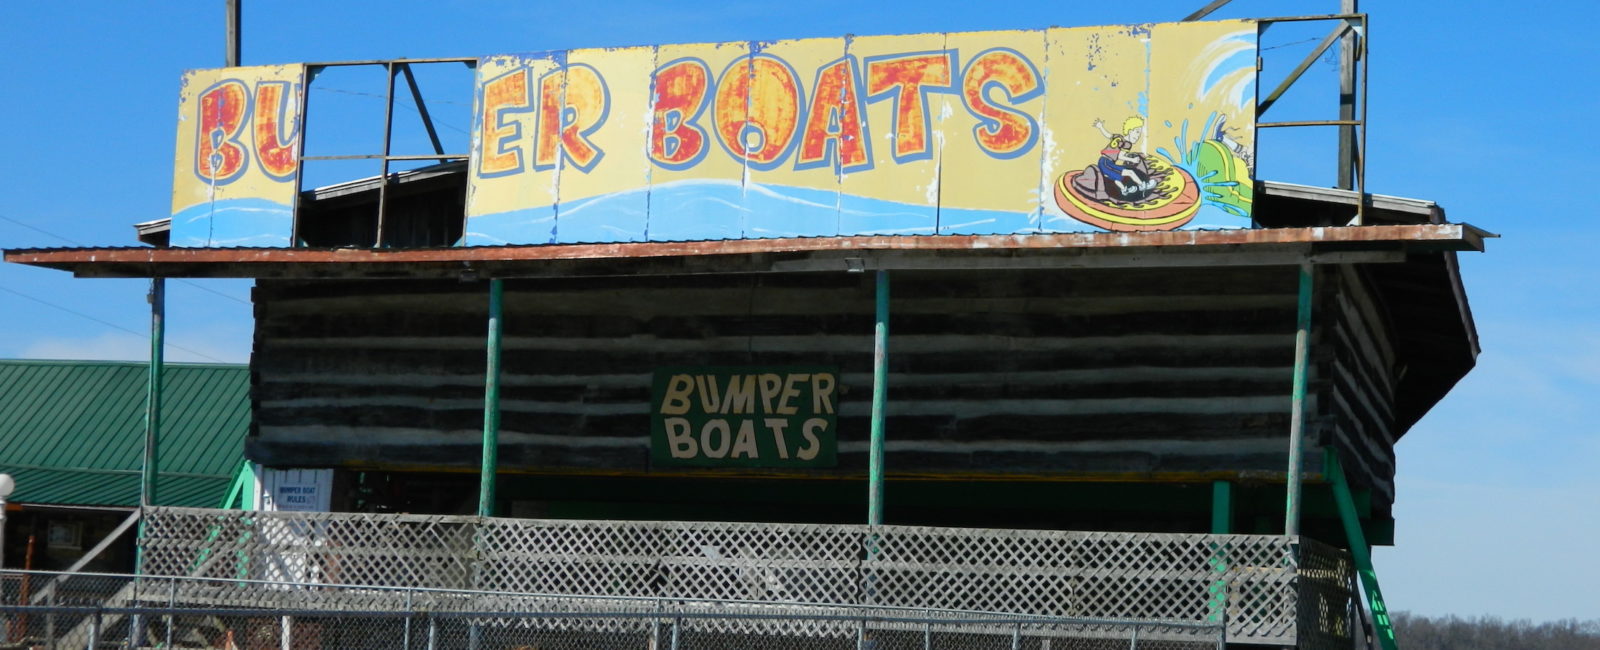 Bumper Boat, abandoned building